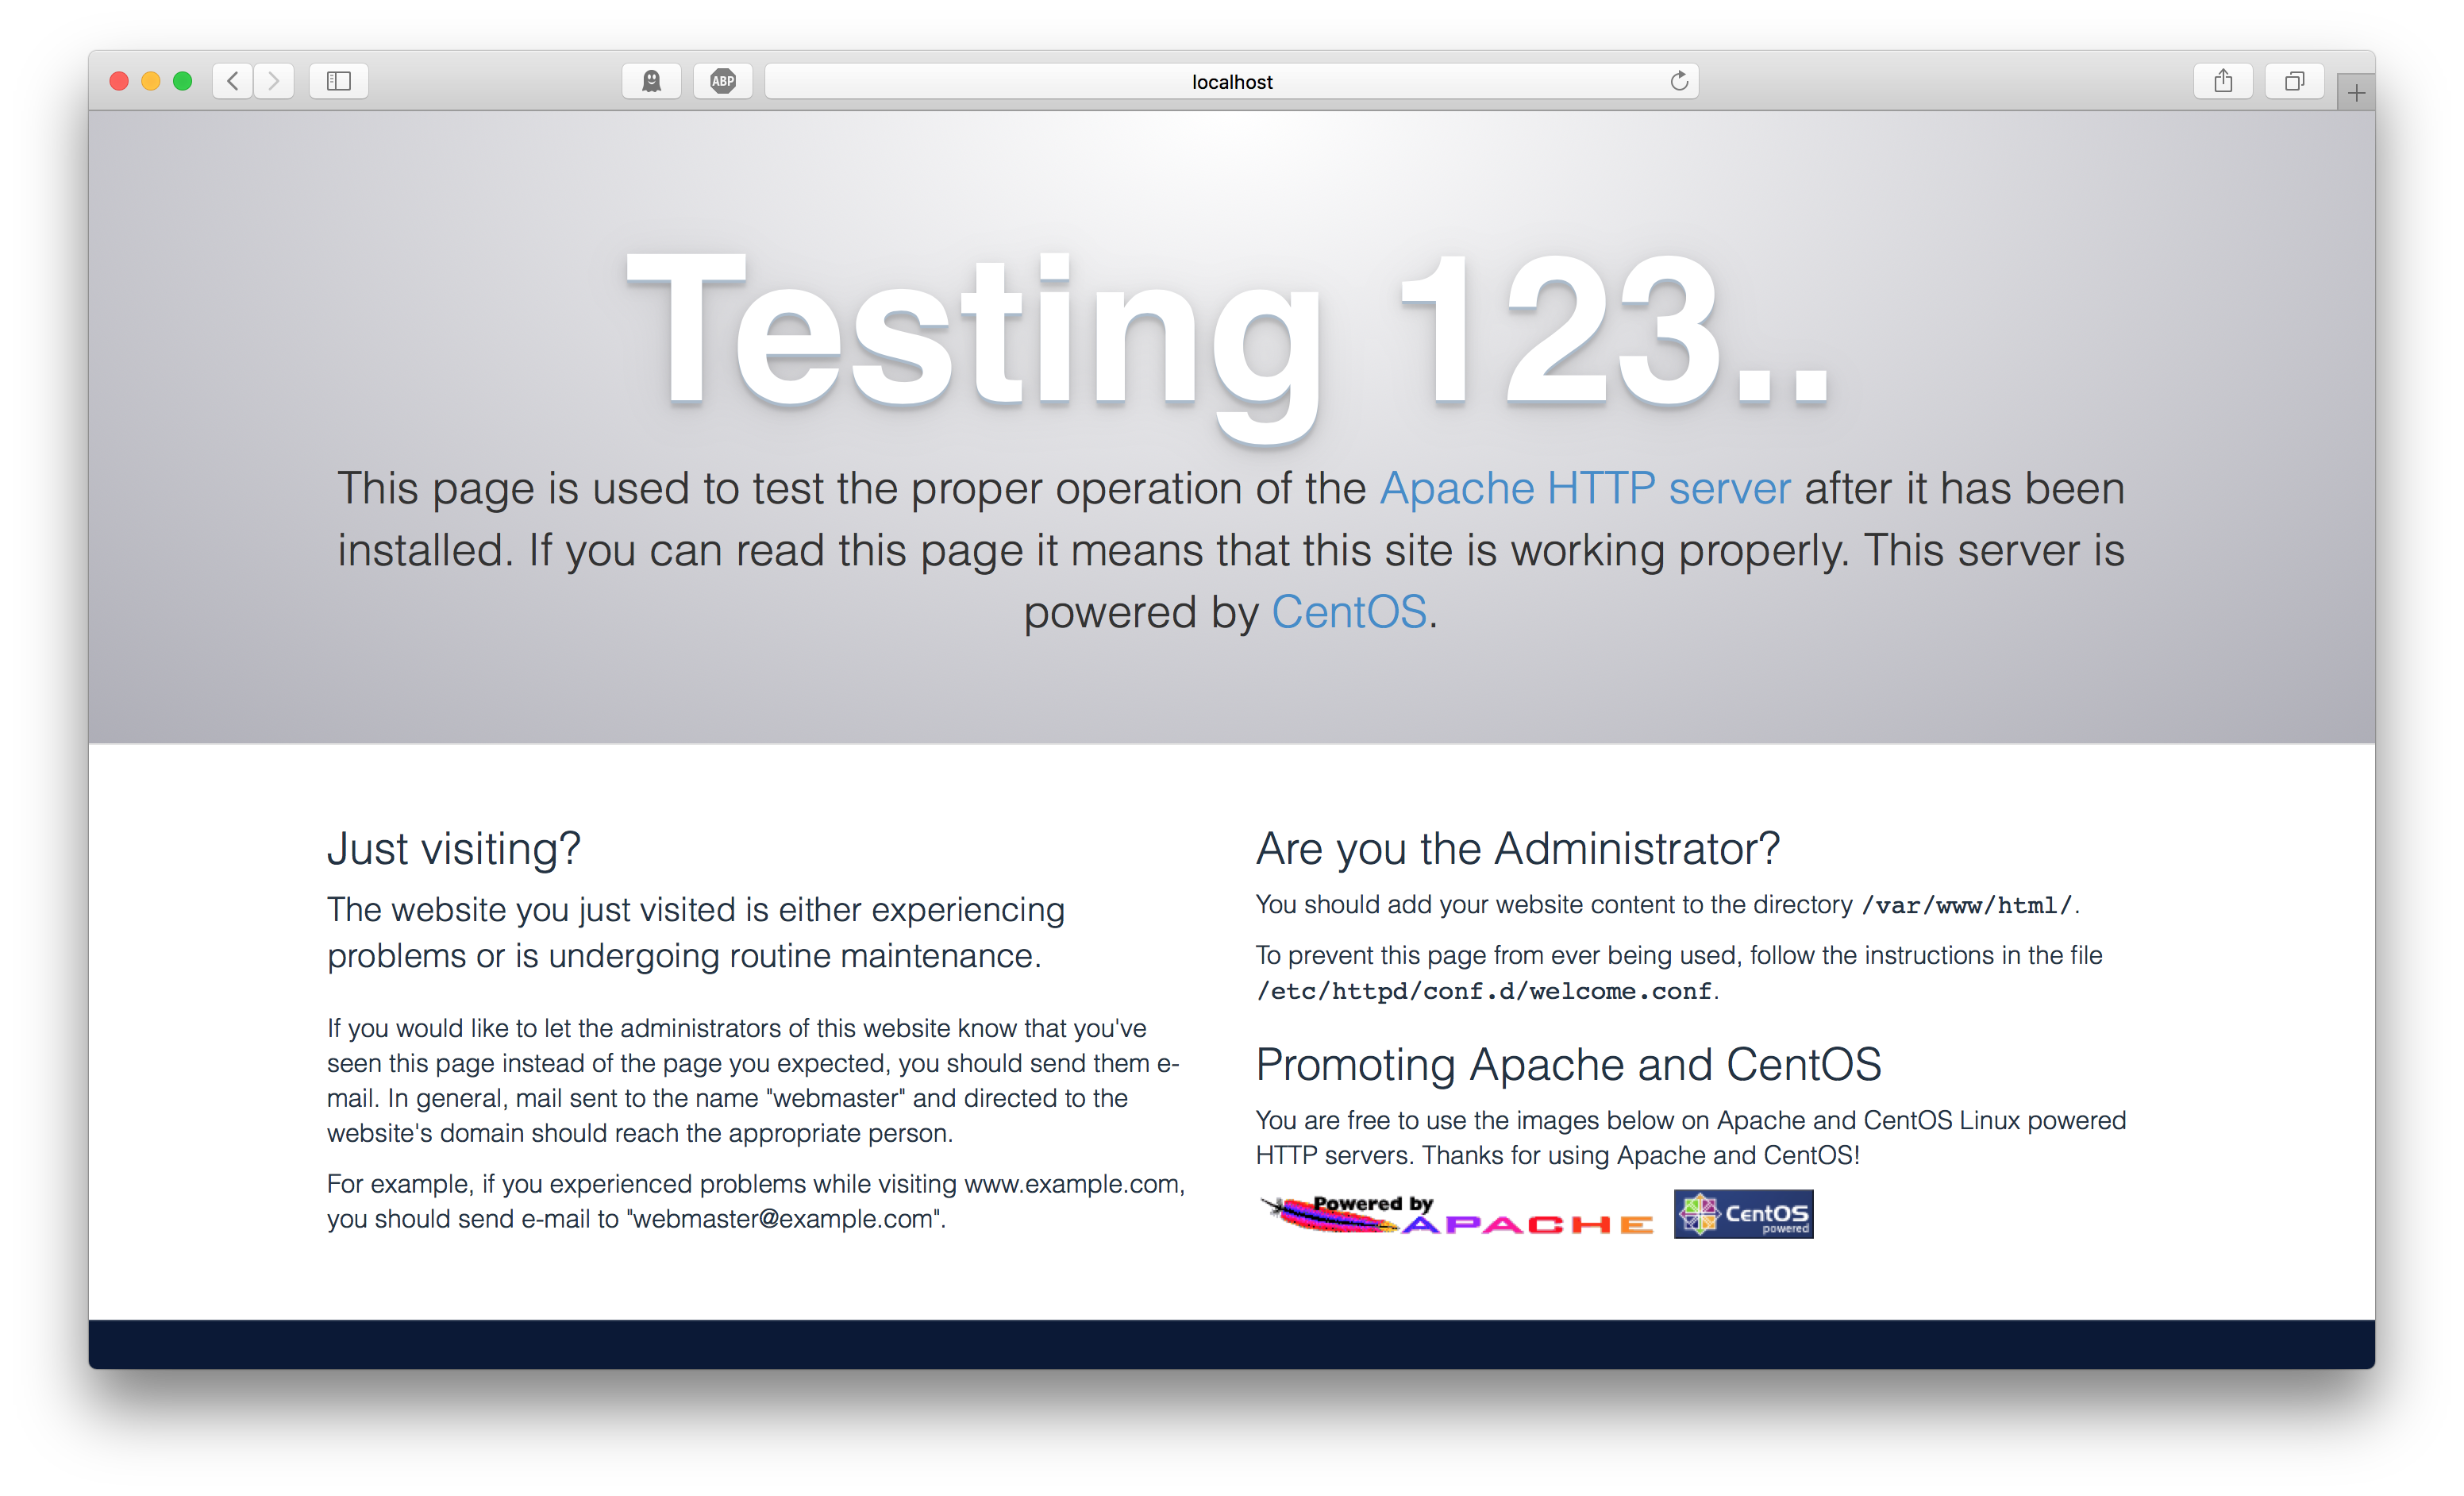 Testing the webserver